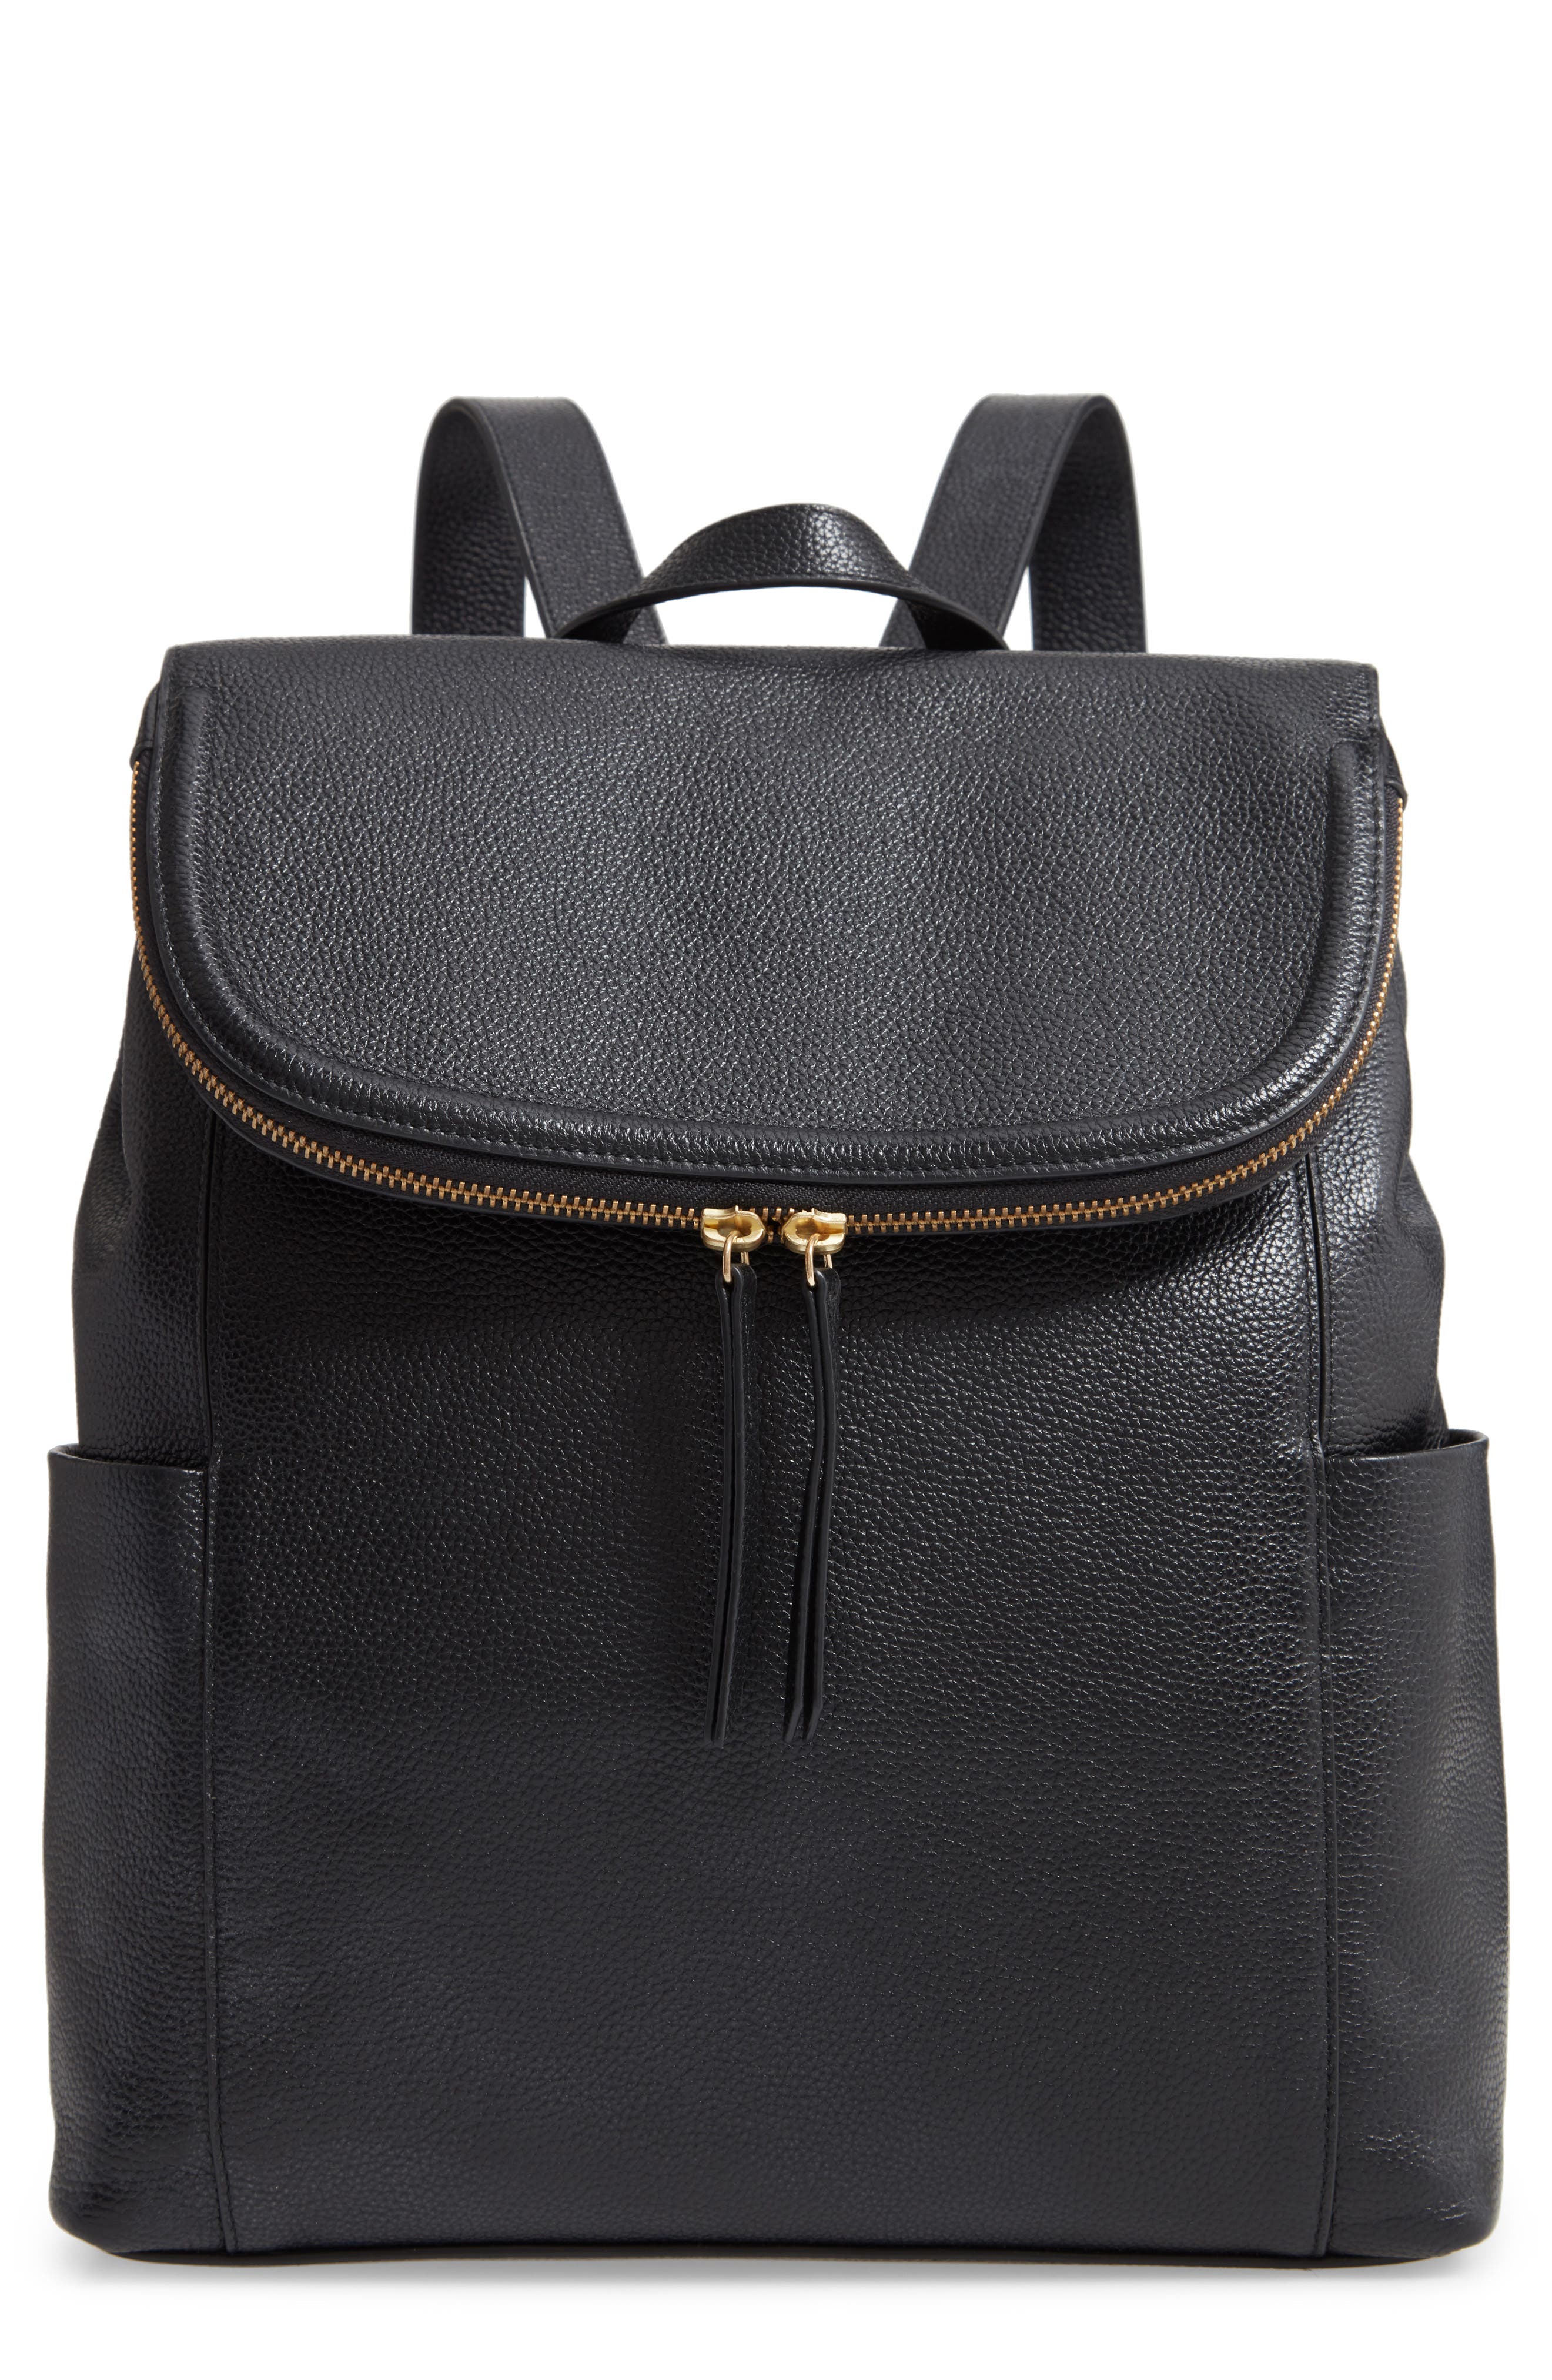 ladies black leather backpack handbag